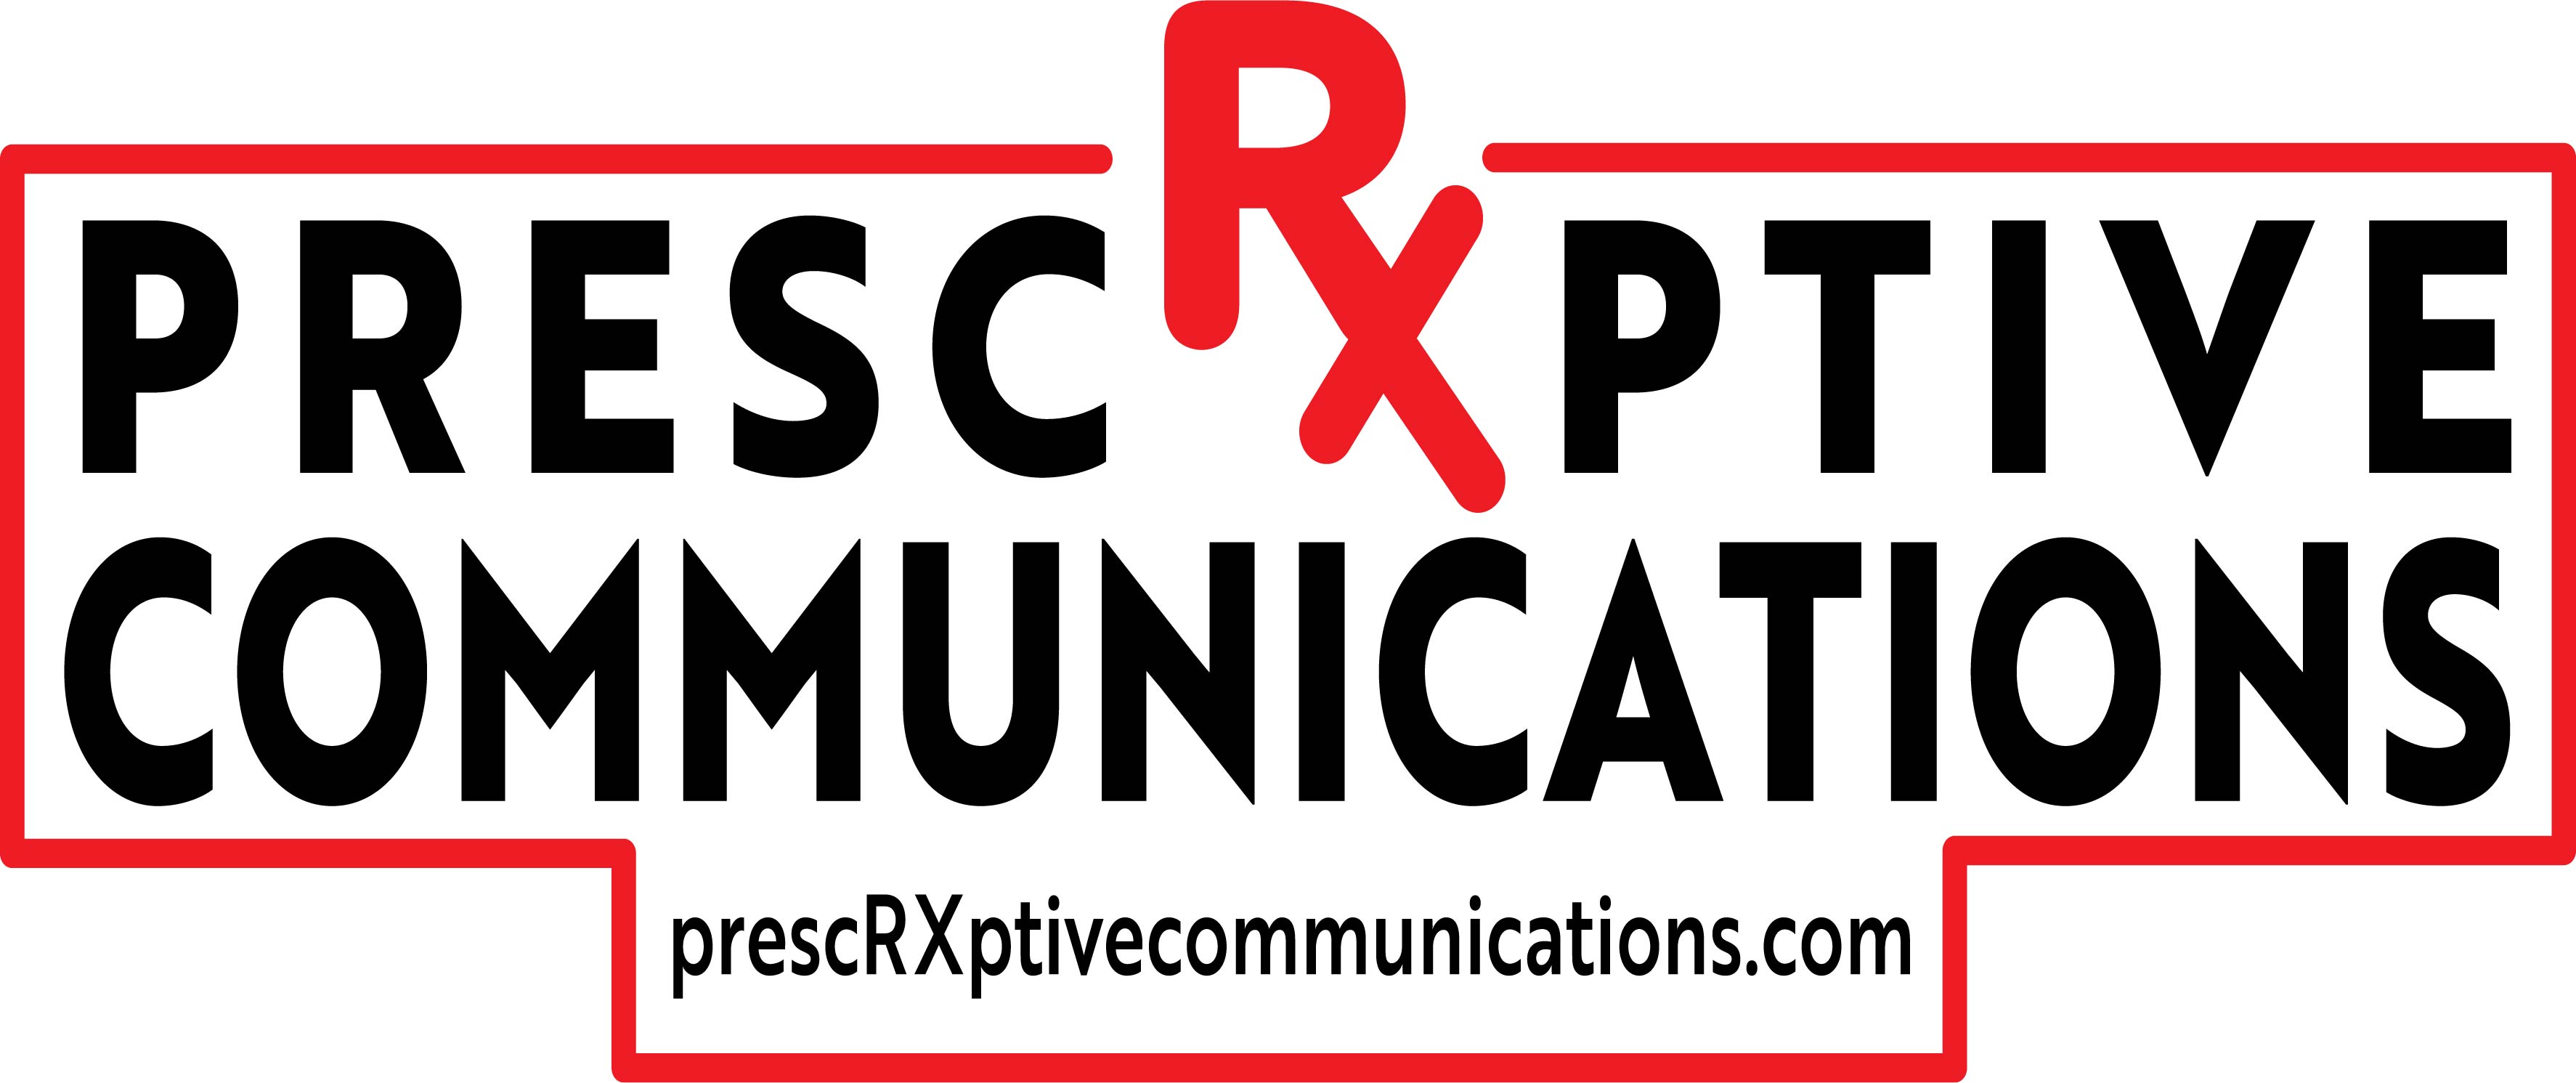 Prescrxptive Communications, LLC